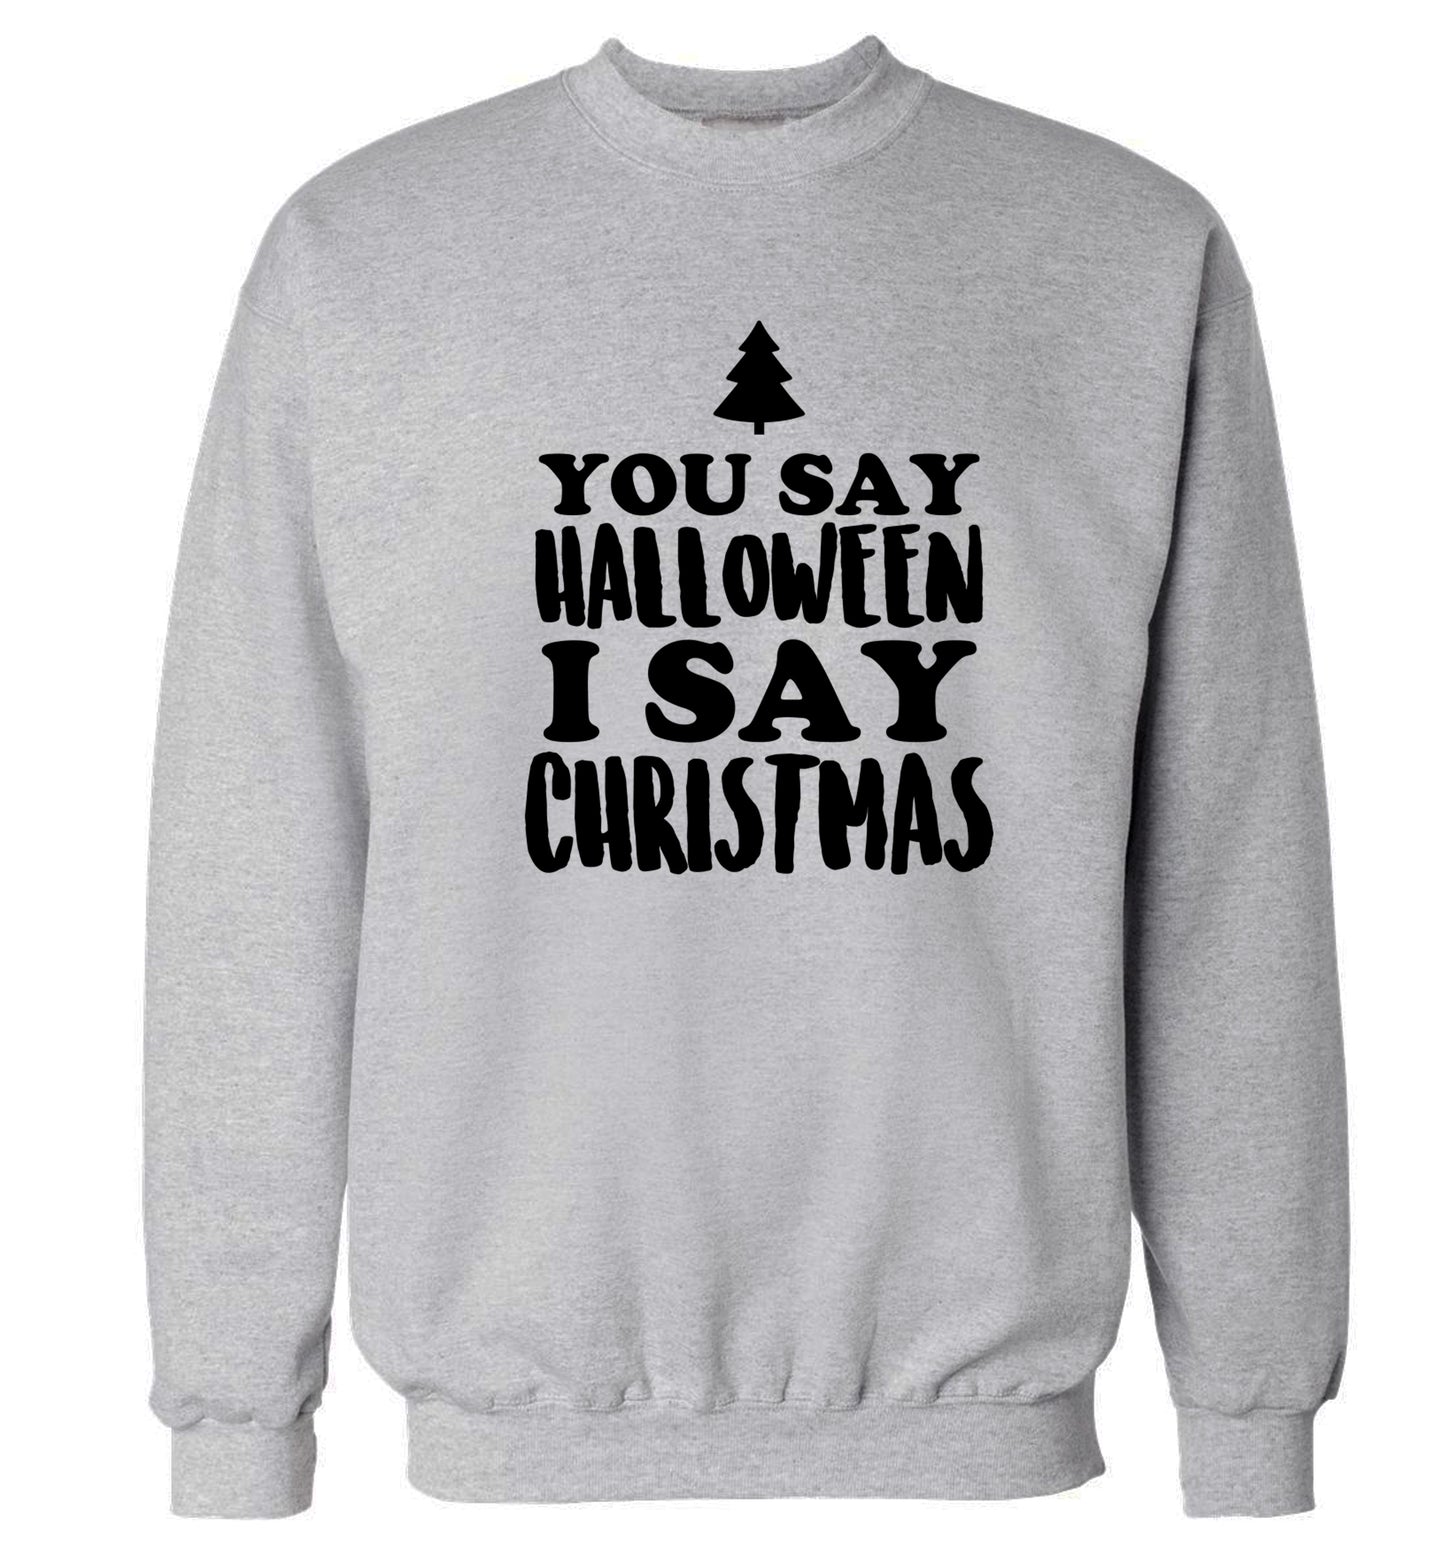 You say halloween I say christmas! Adult's unisex grey Sweater 2XL